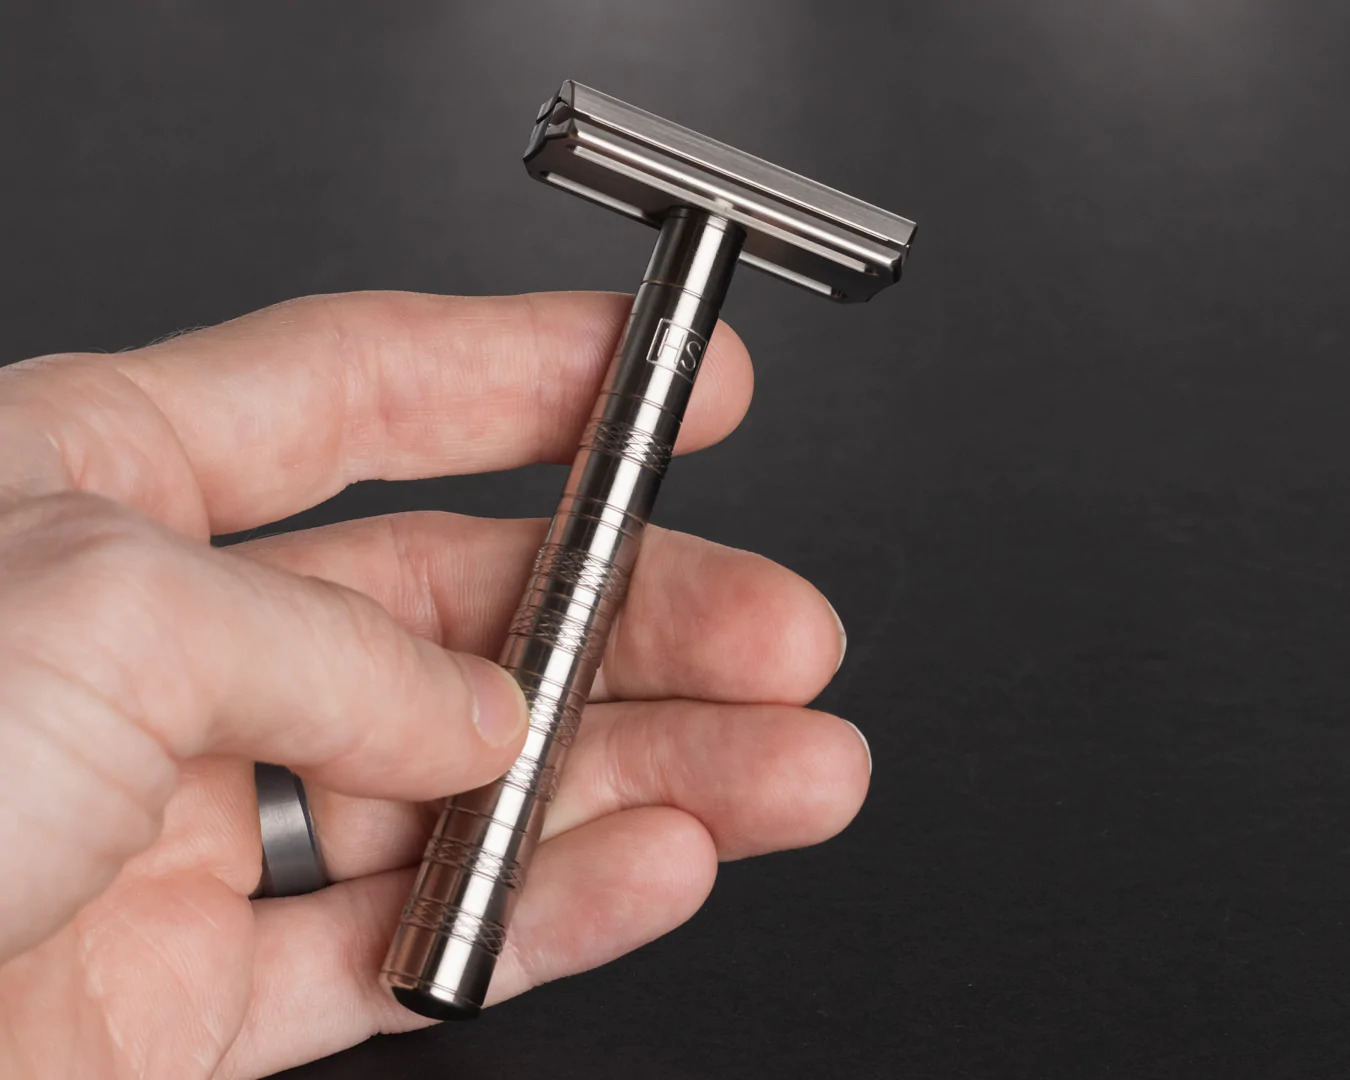 Henson eco-friendly razors